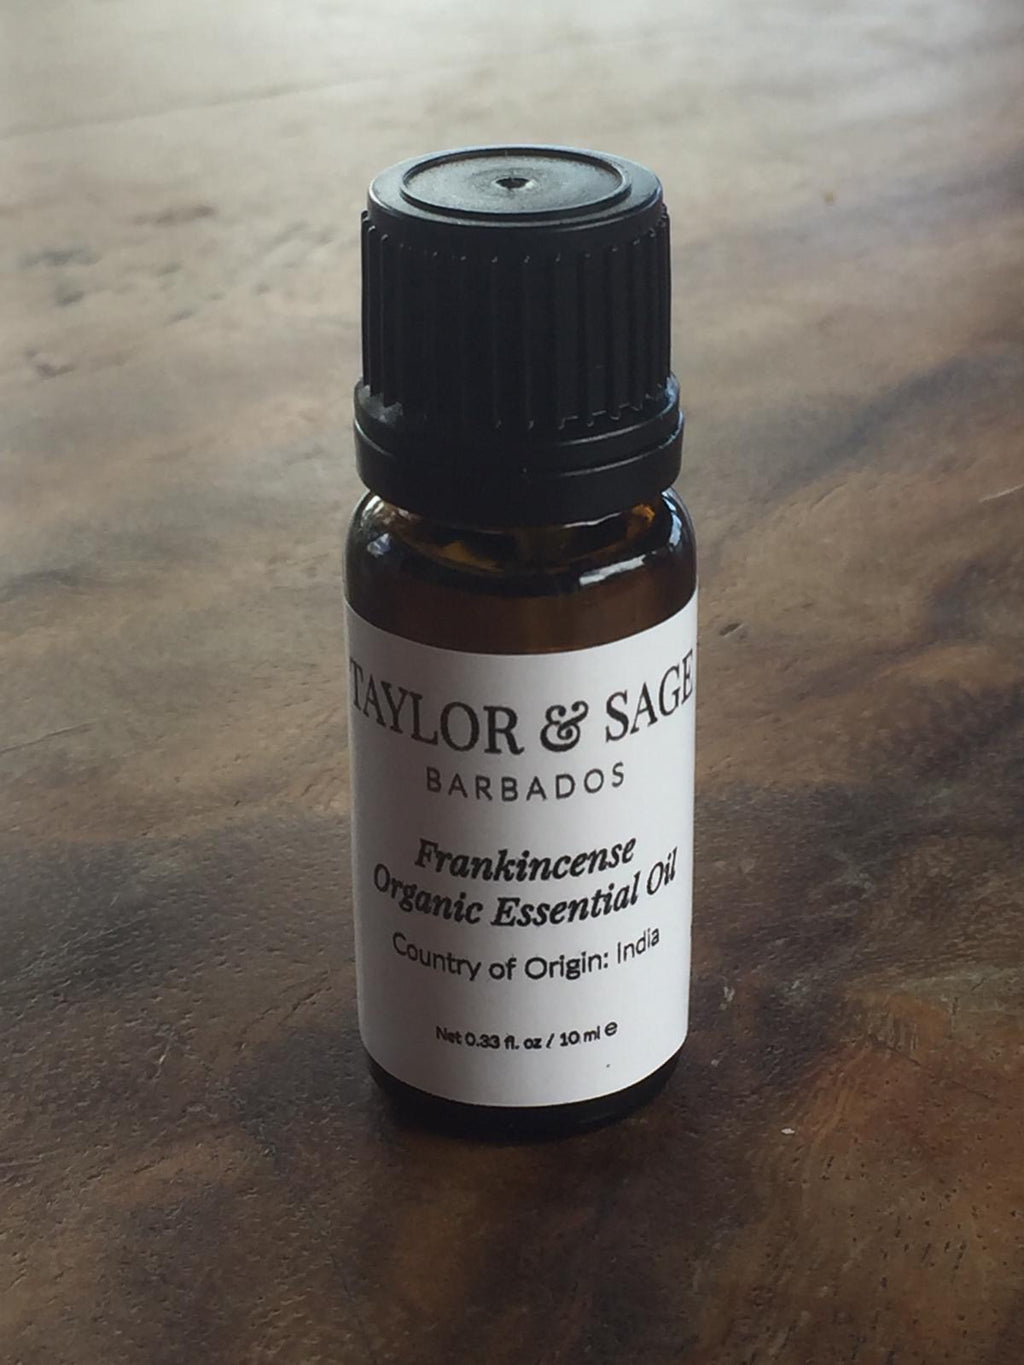 Taylor & Sage, ORGANIC Essential Oil, Frankincense, 10ml